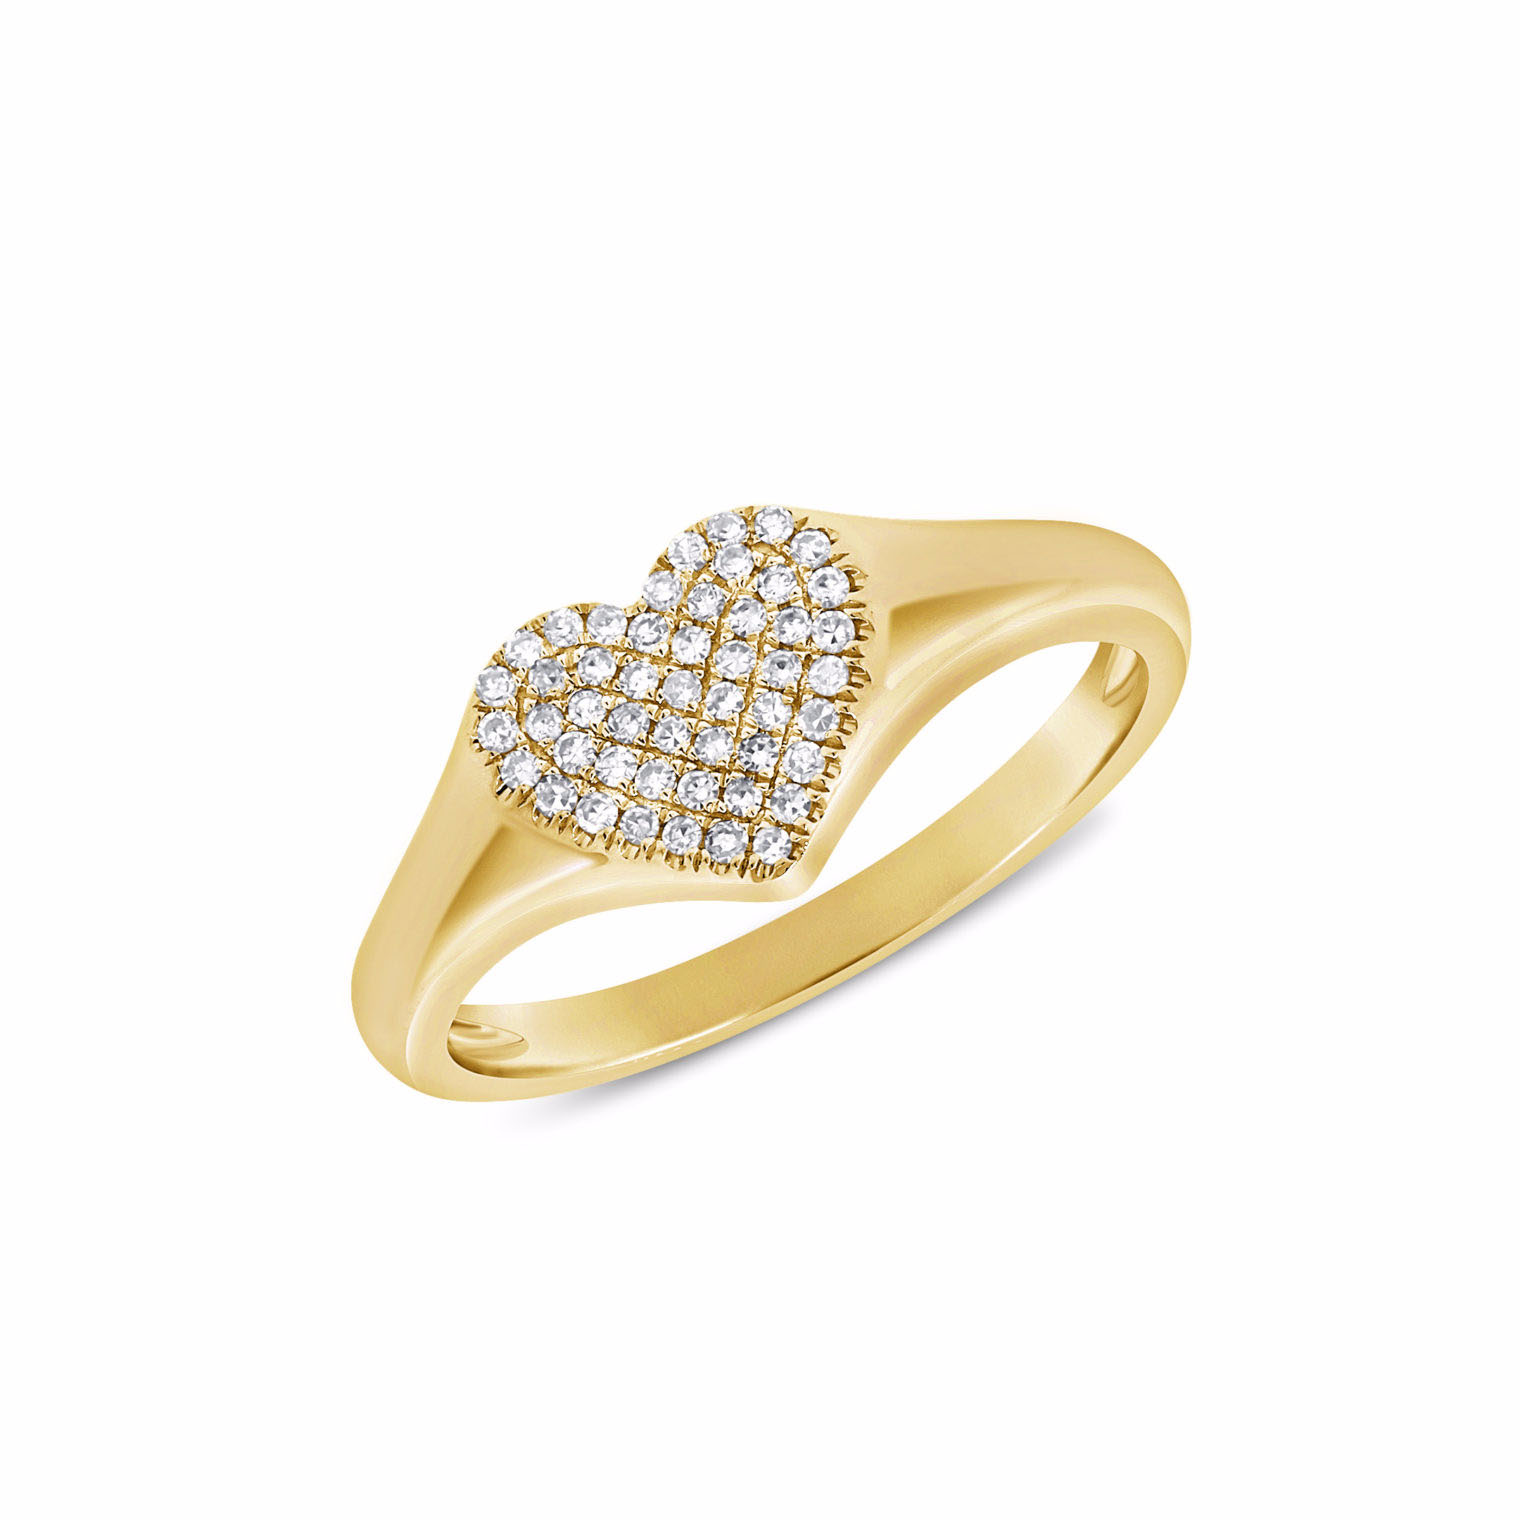 OEM/ODM Jewelry ring 18k gold plated sterling silver custom design manufacturer